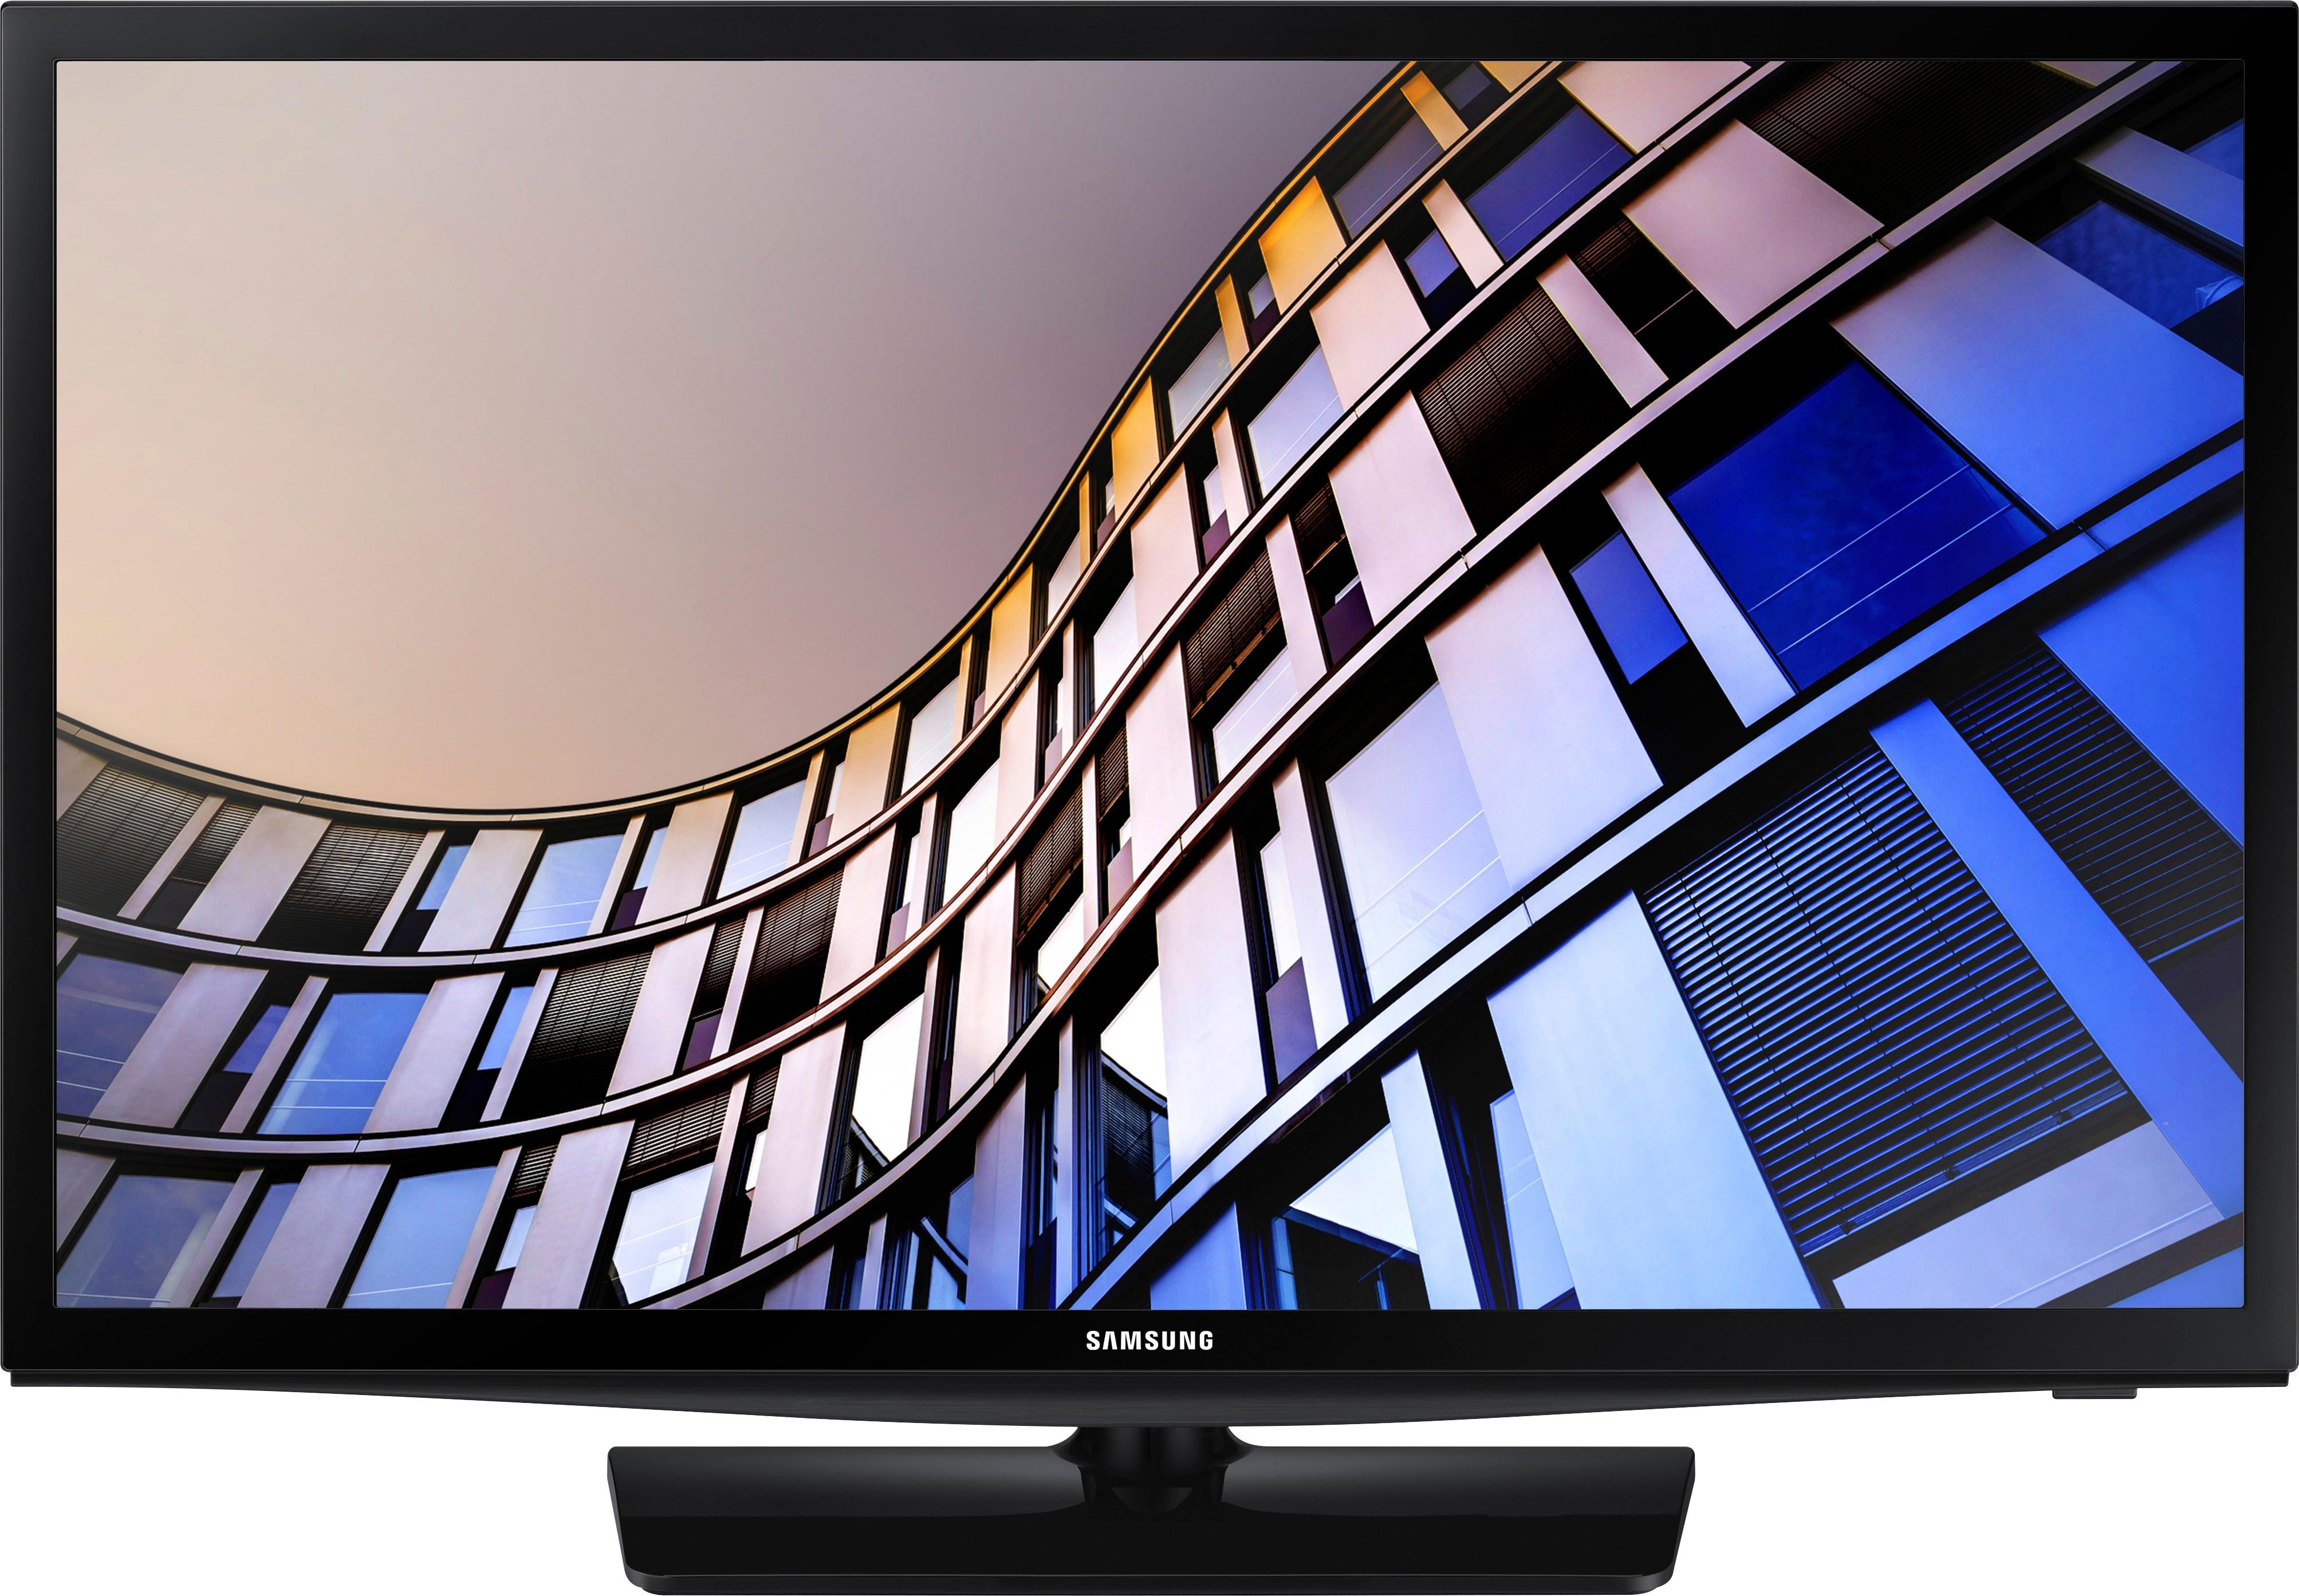 TV Samsung HD 24N4305 – Smart TV 24″, HDR, Ultra Clean View, PurColor,  Micro Dimming Pro – Shopavia